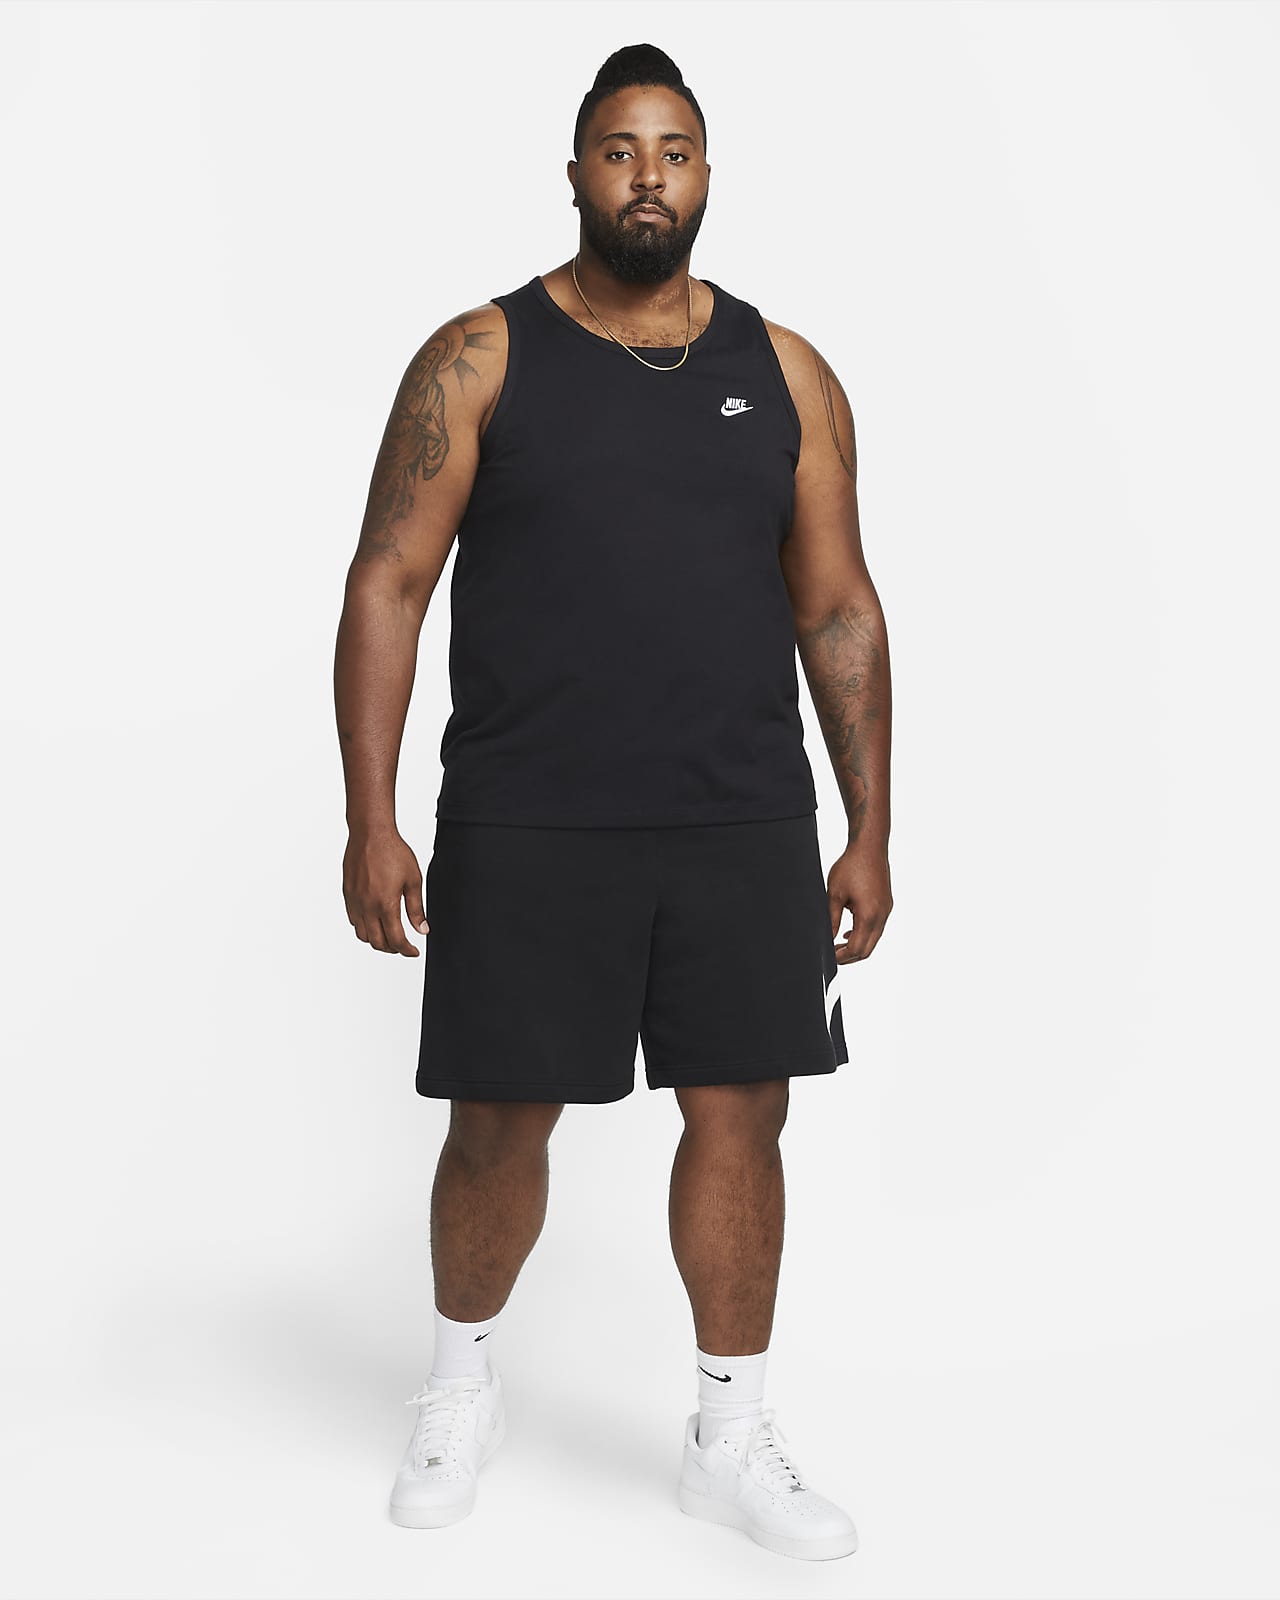 Explore Nike Women's Yoga Tank Tops & Sleeveless Shirts. Nike CH